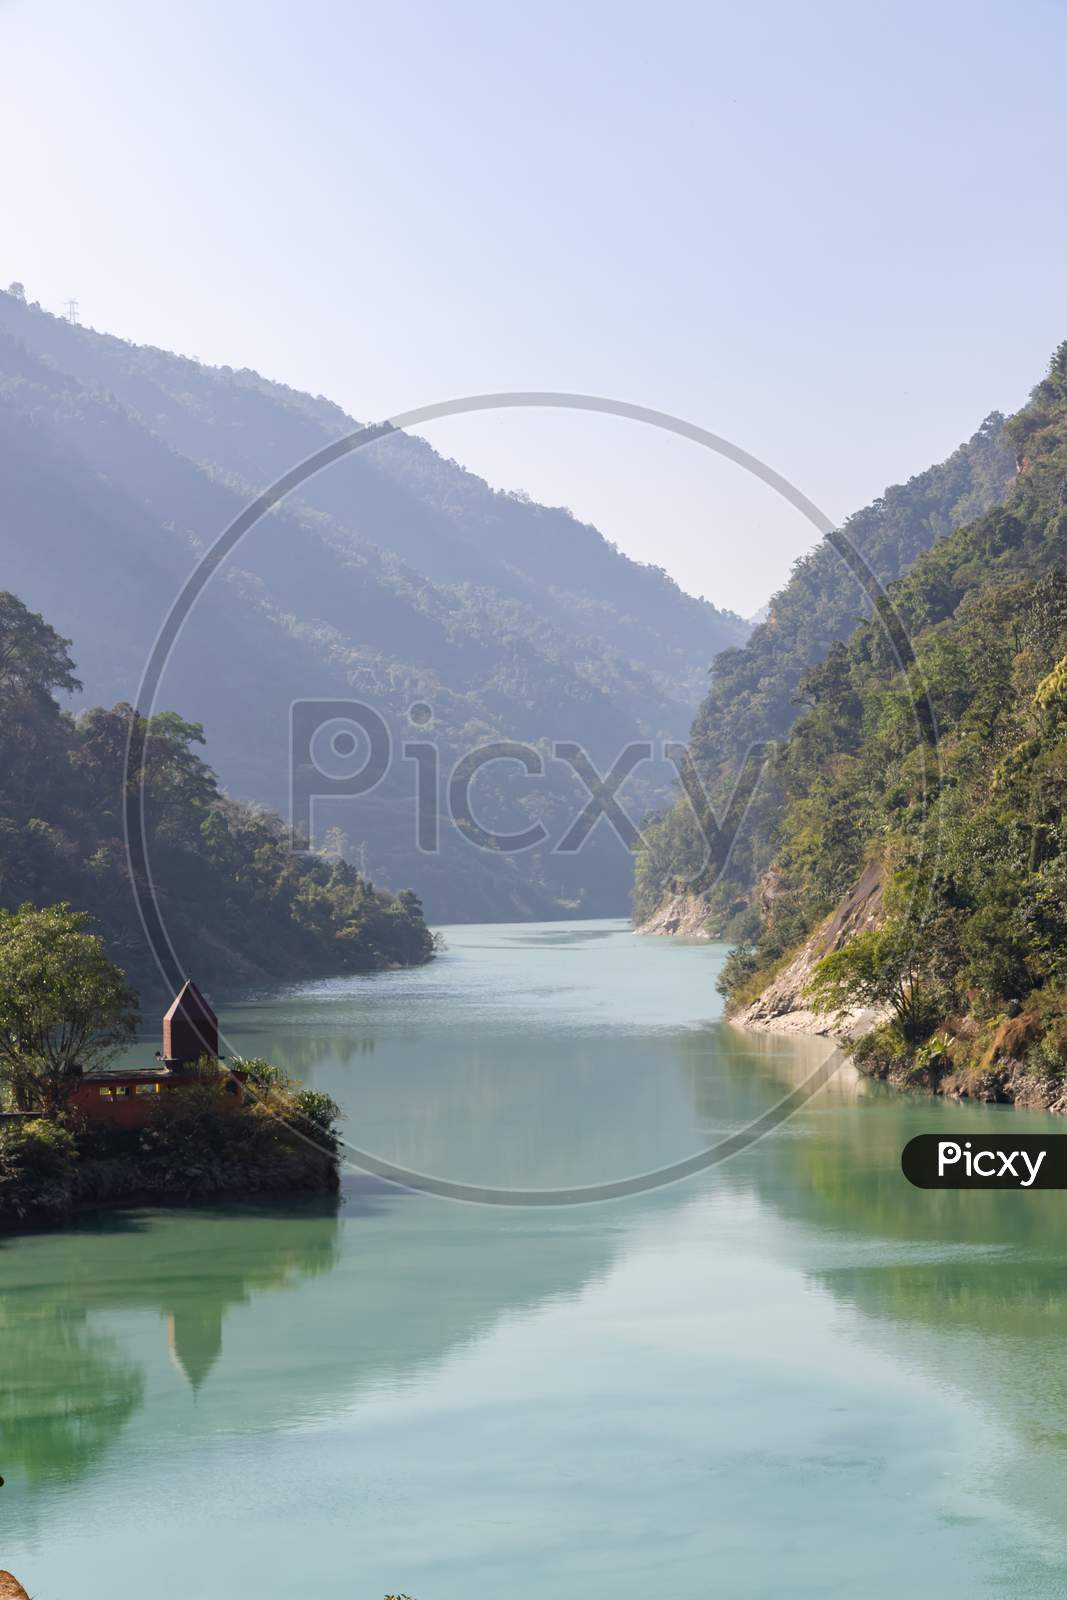 Teesta river flowing down from Sikkim to Darjeeling district